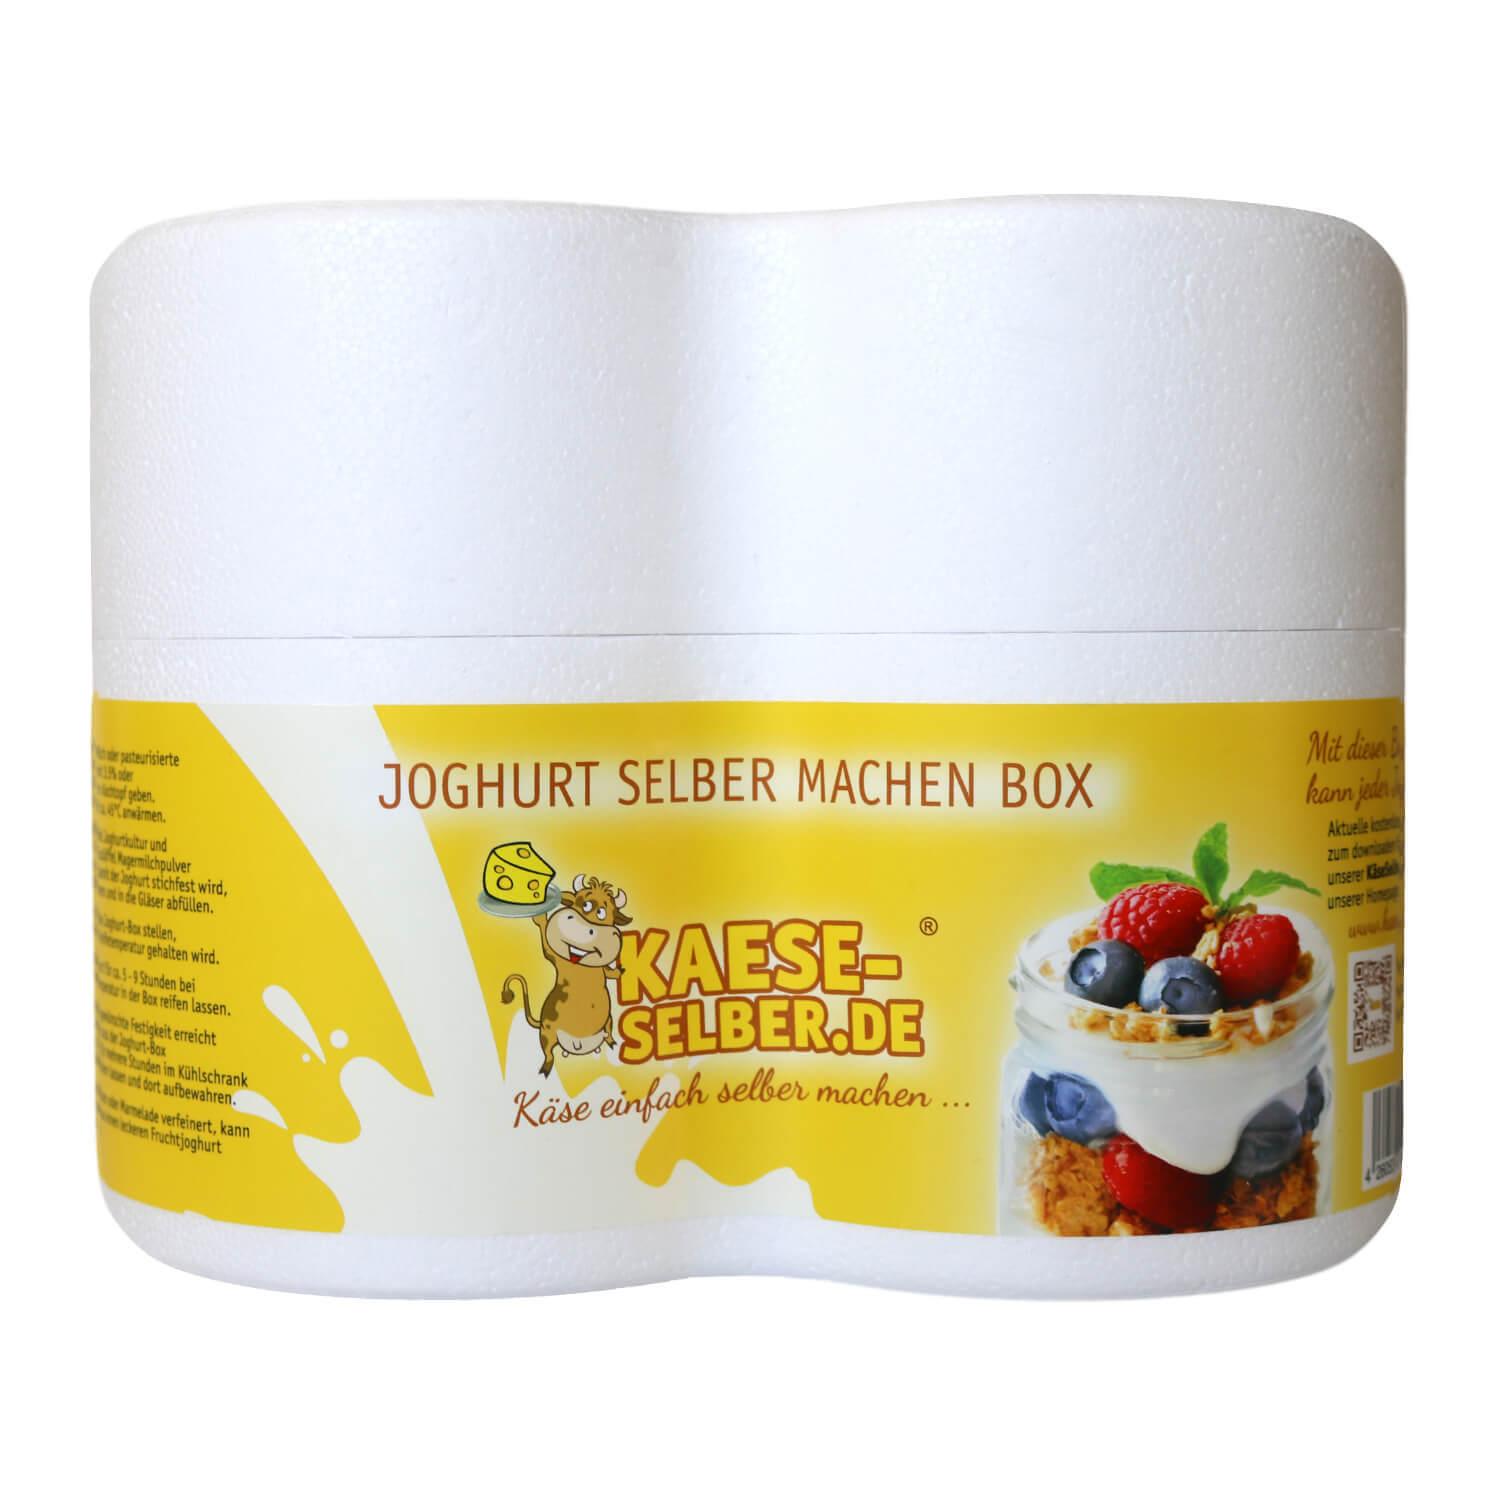 Joghurt Reifebox